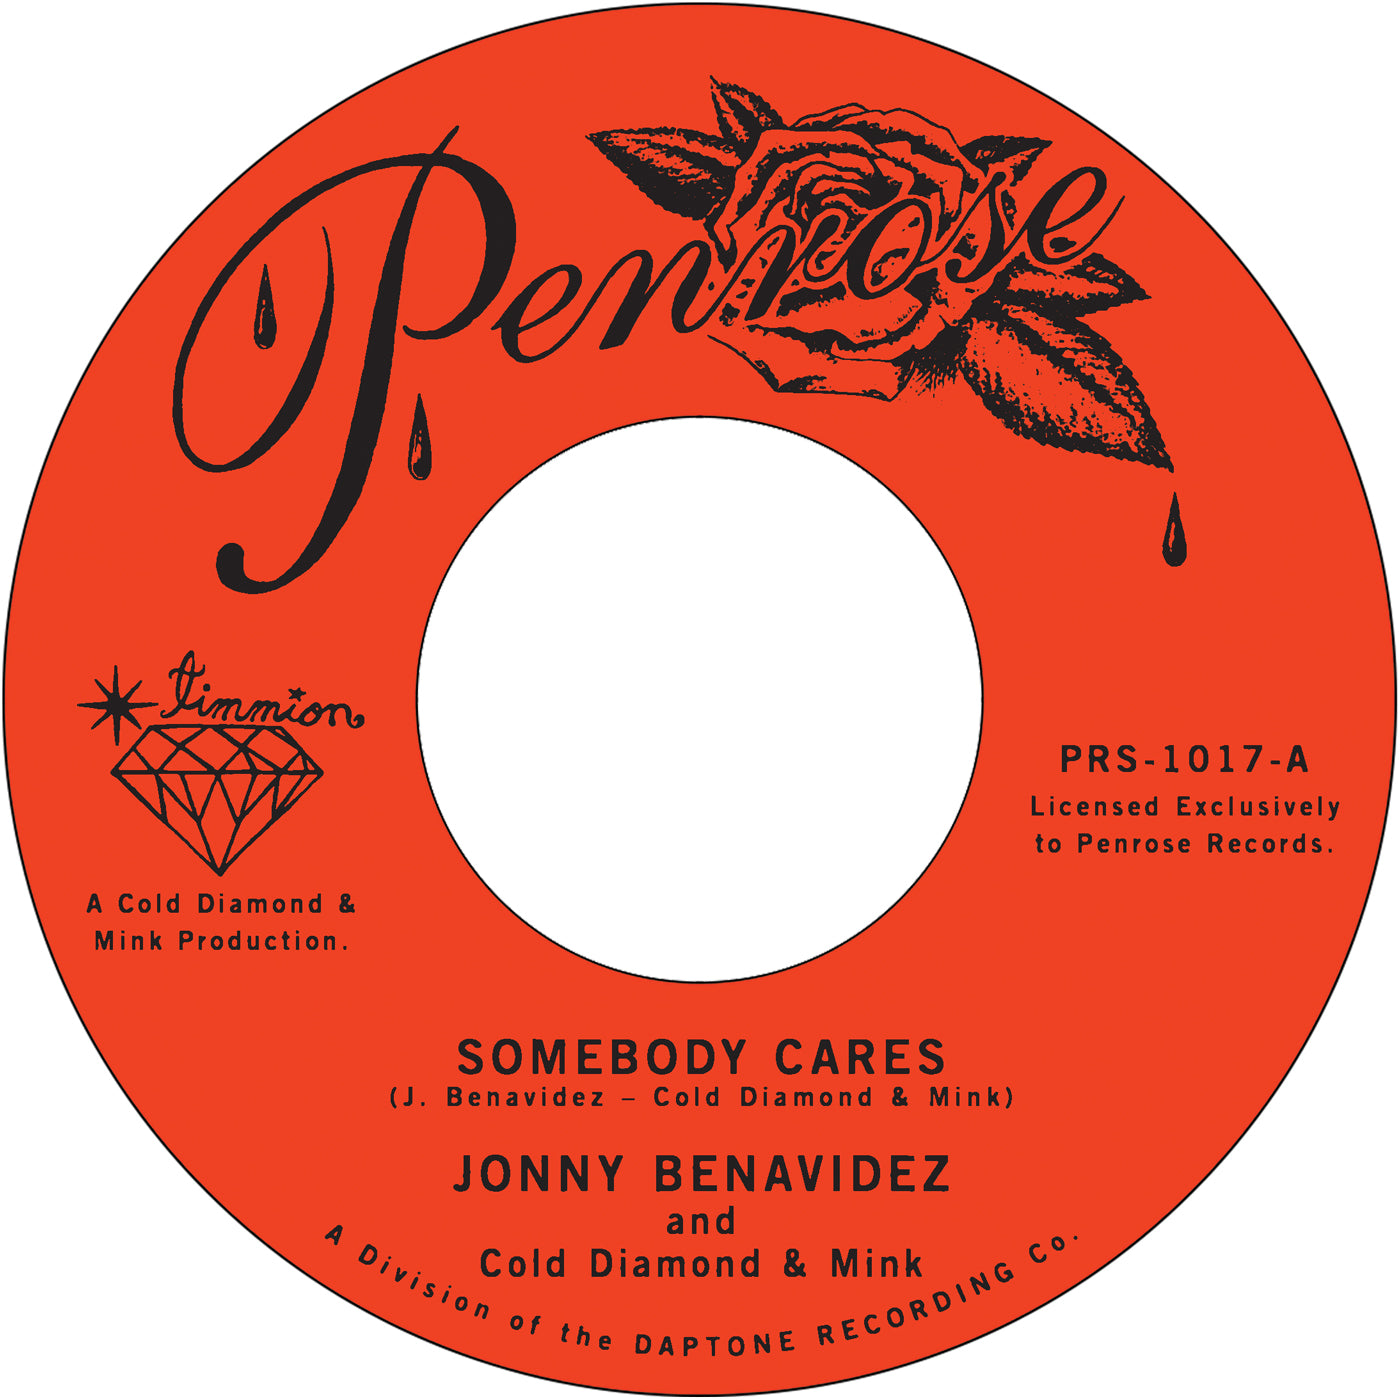 Jonny Benavidez "Somebody Cares" 45